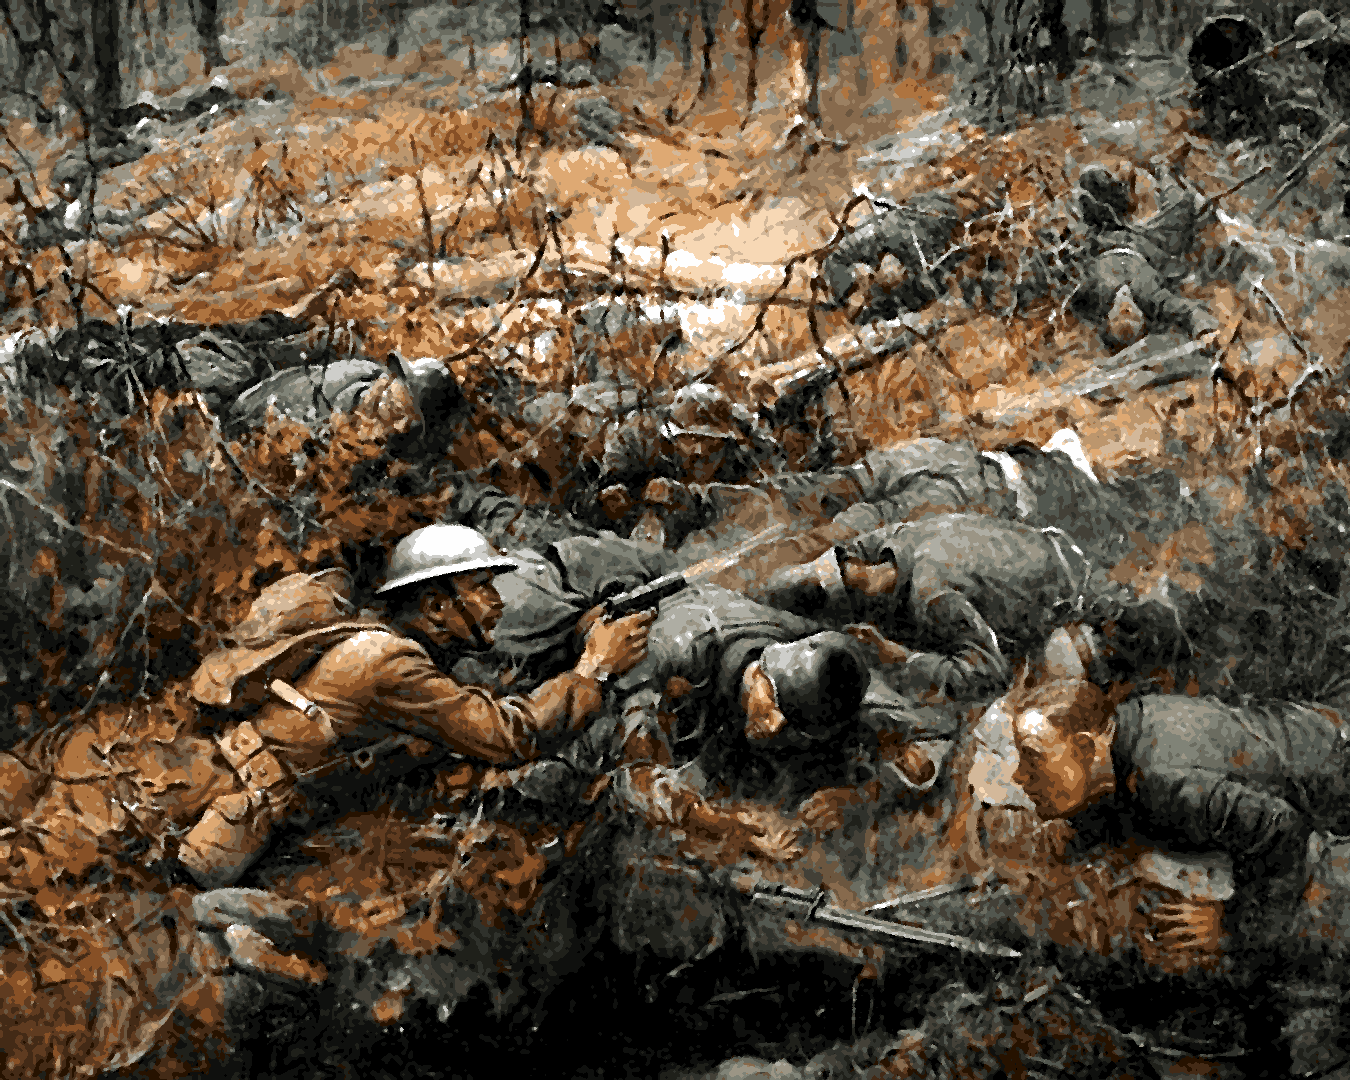 WW1 Collection PD (6) - Sergeant Alvin C. York, Battle scene - Van-Go Paint-By-Number Kit